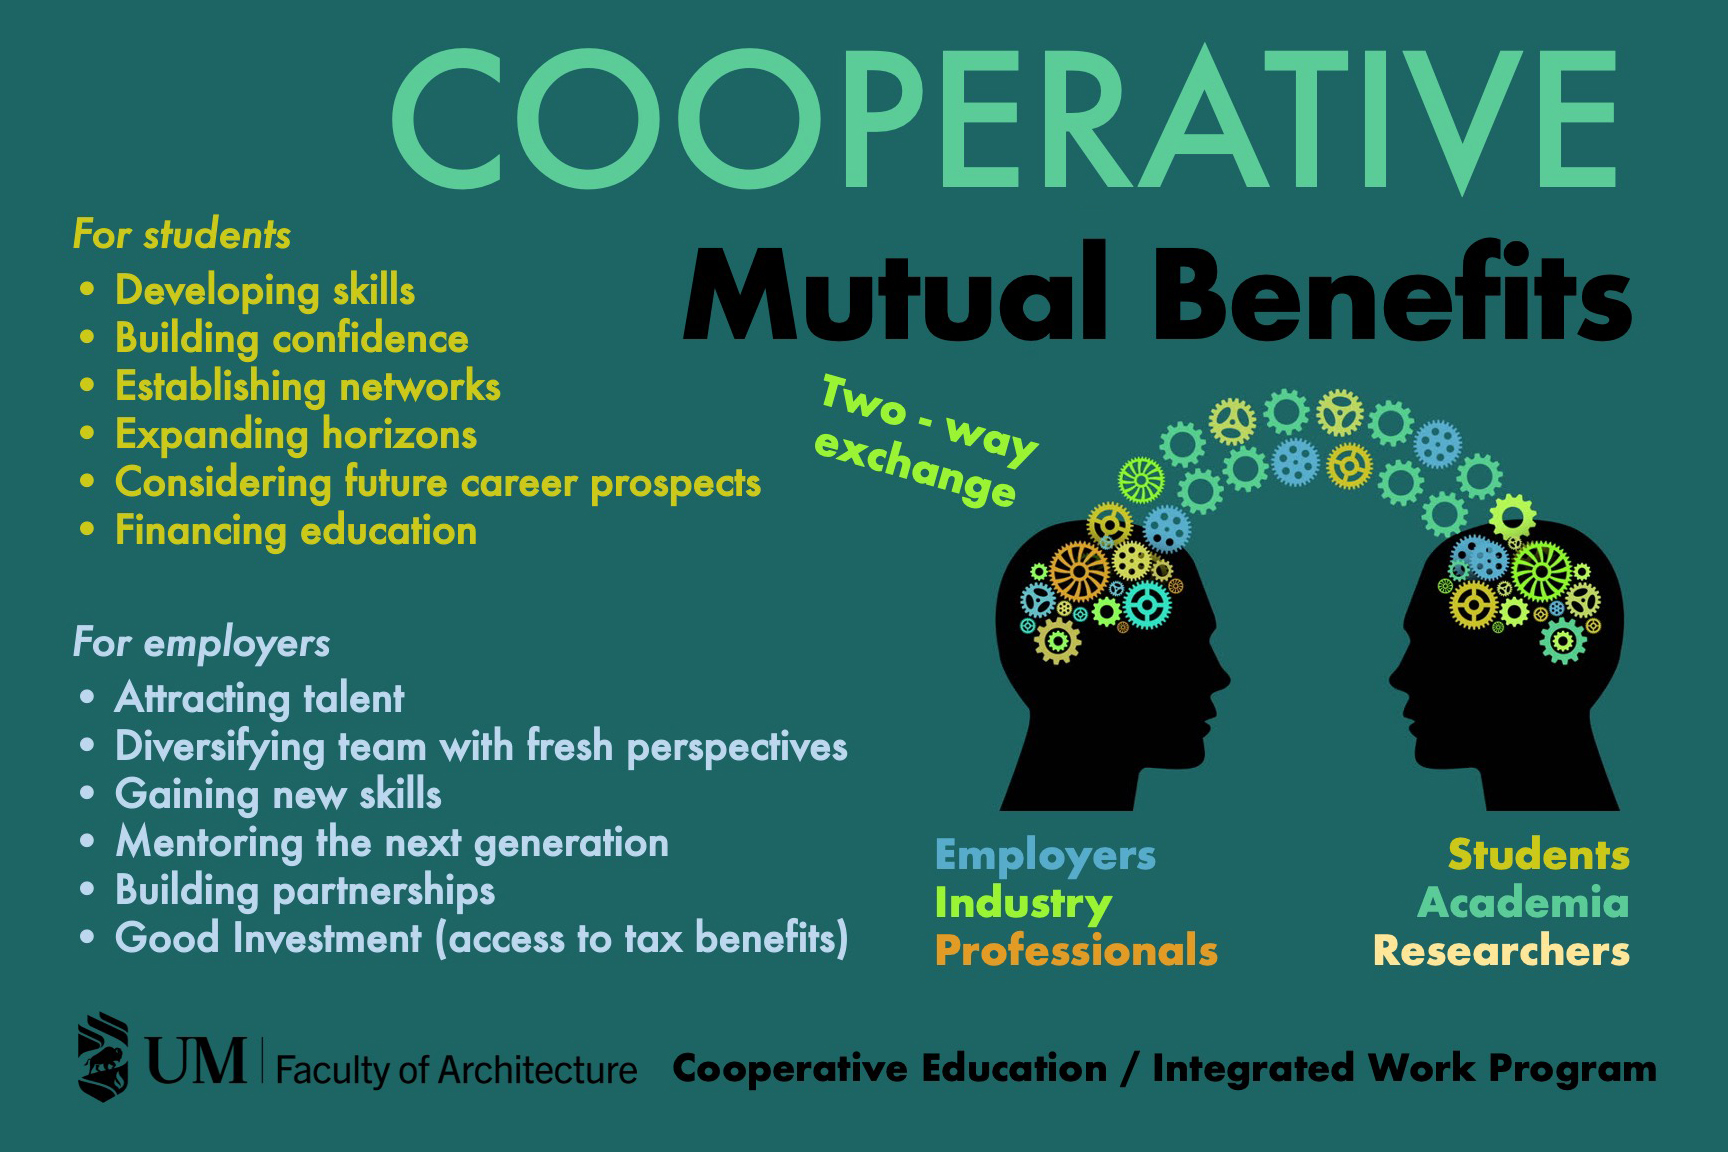 Cooperative mutual benefits